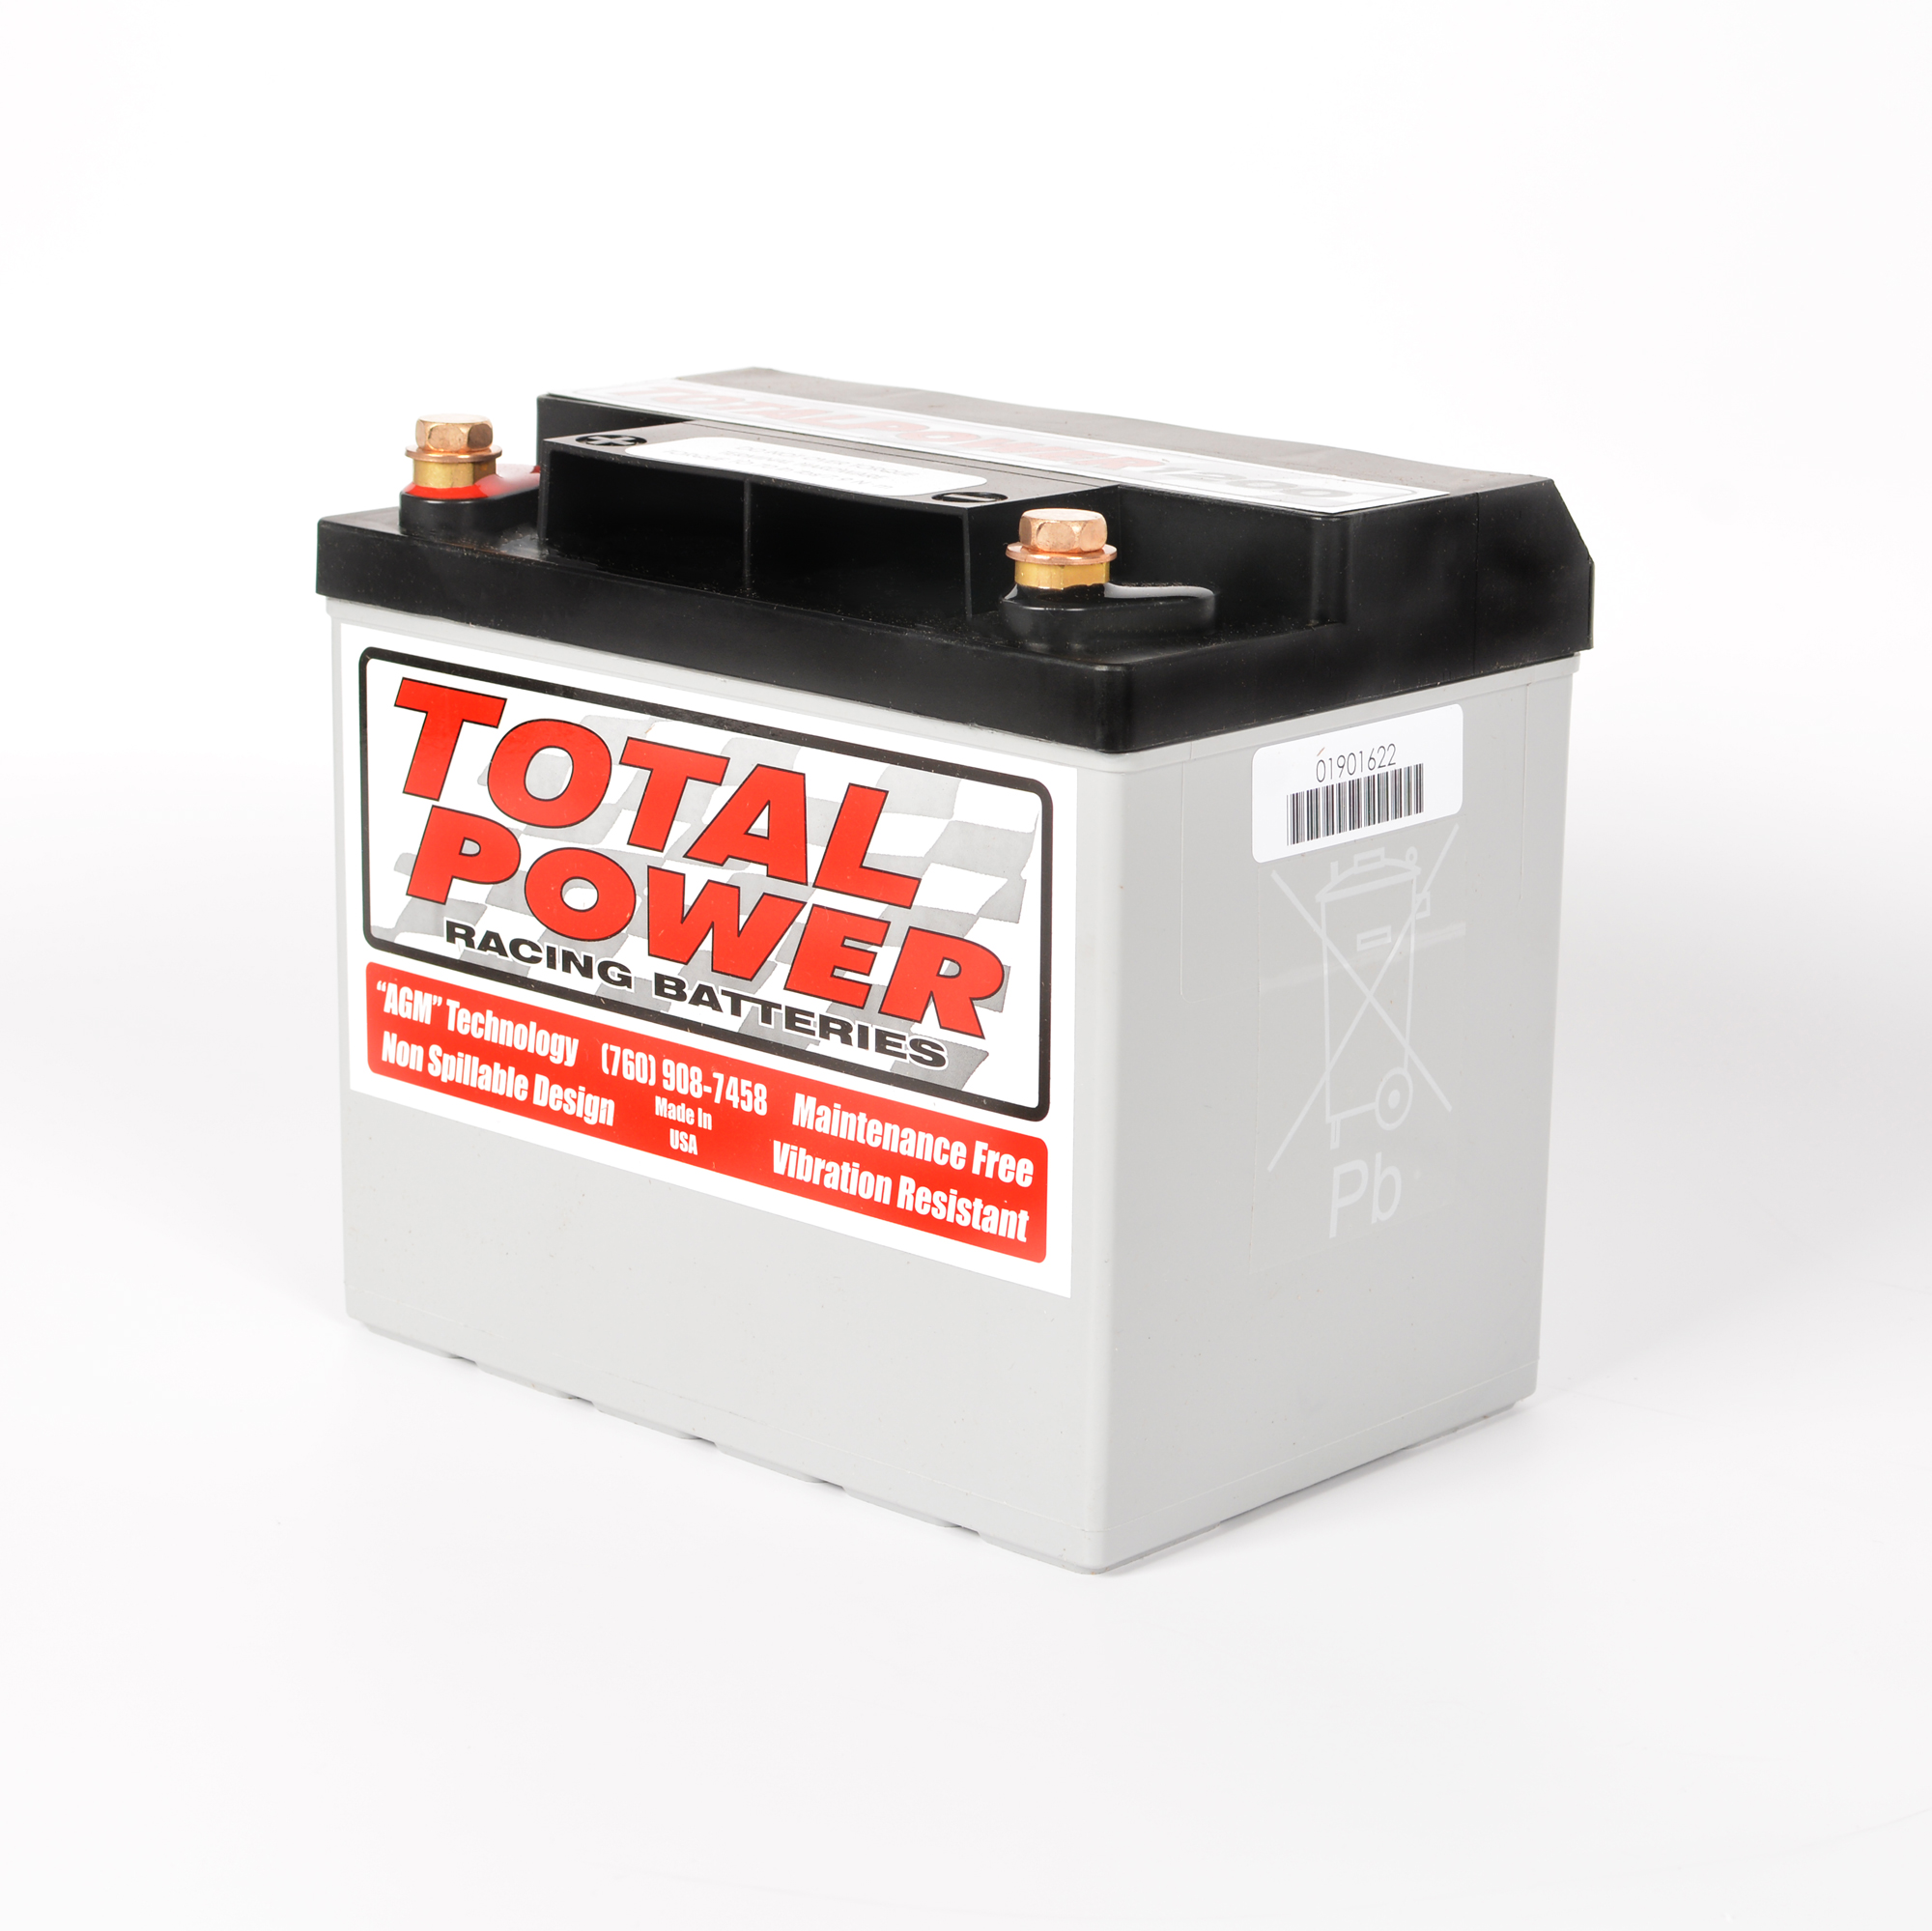 Total Power Racing Batteries - JOES Racing Products